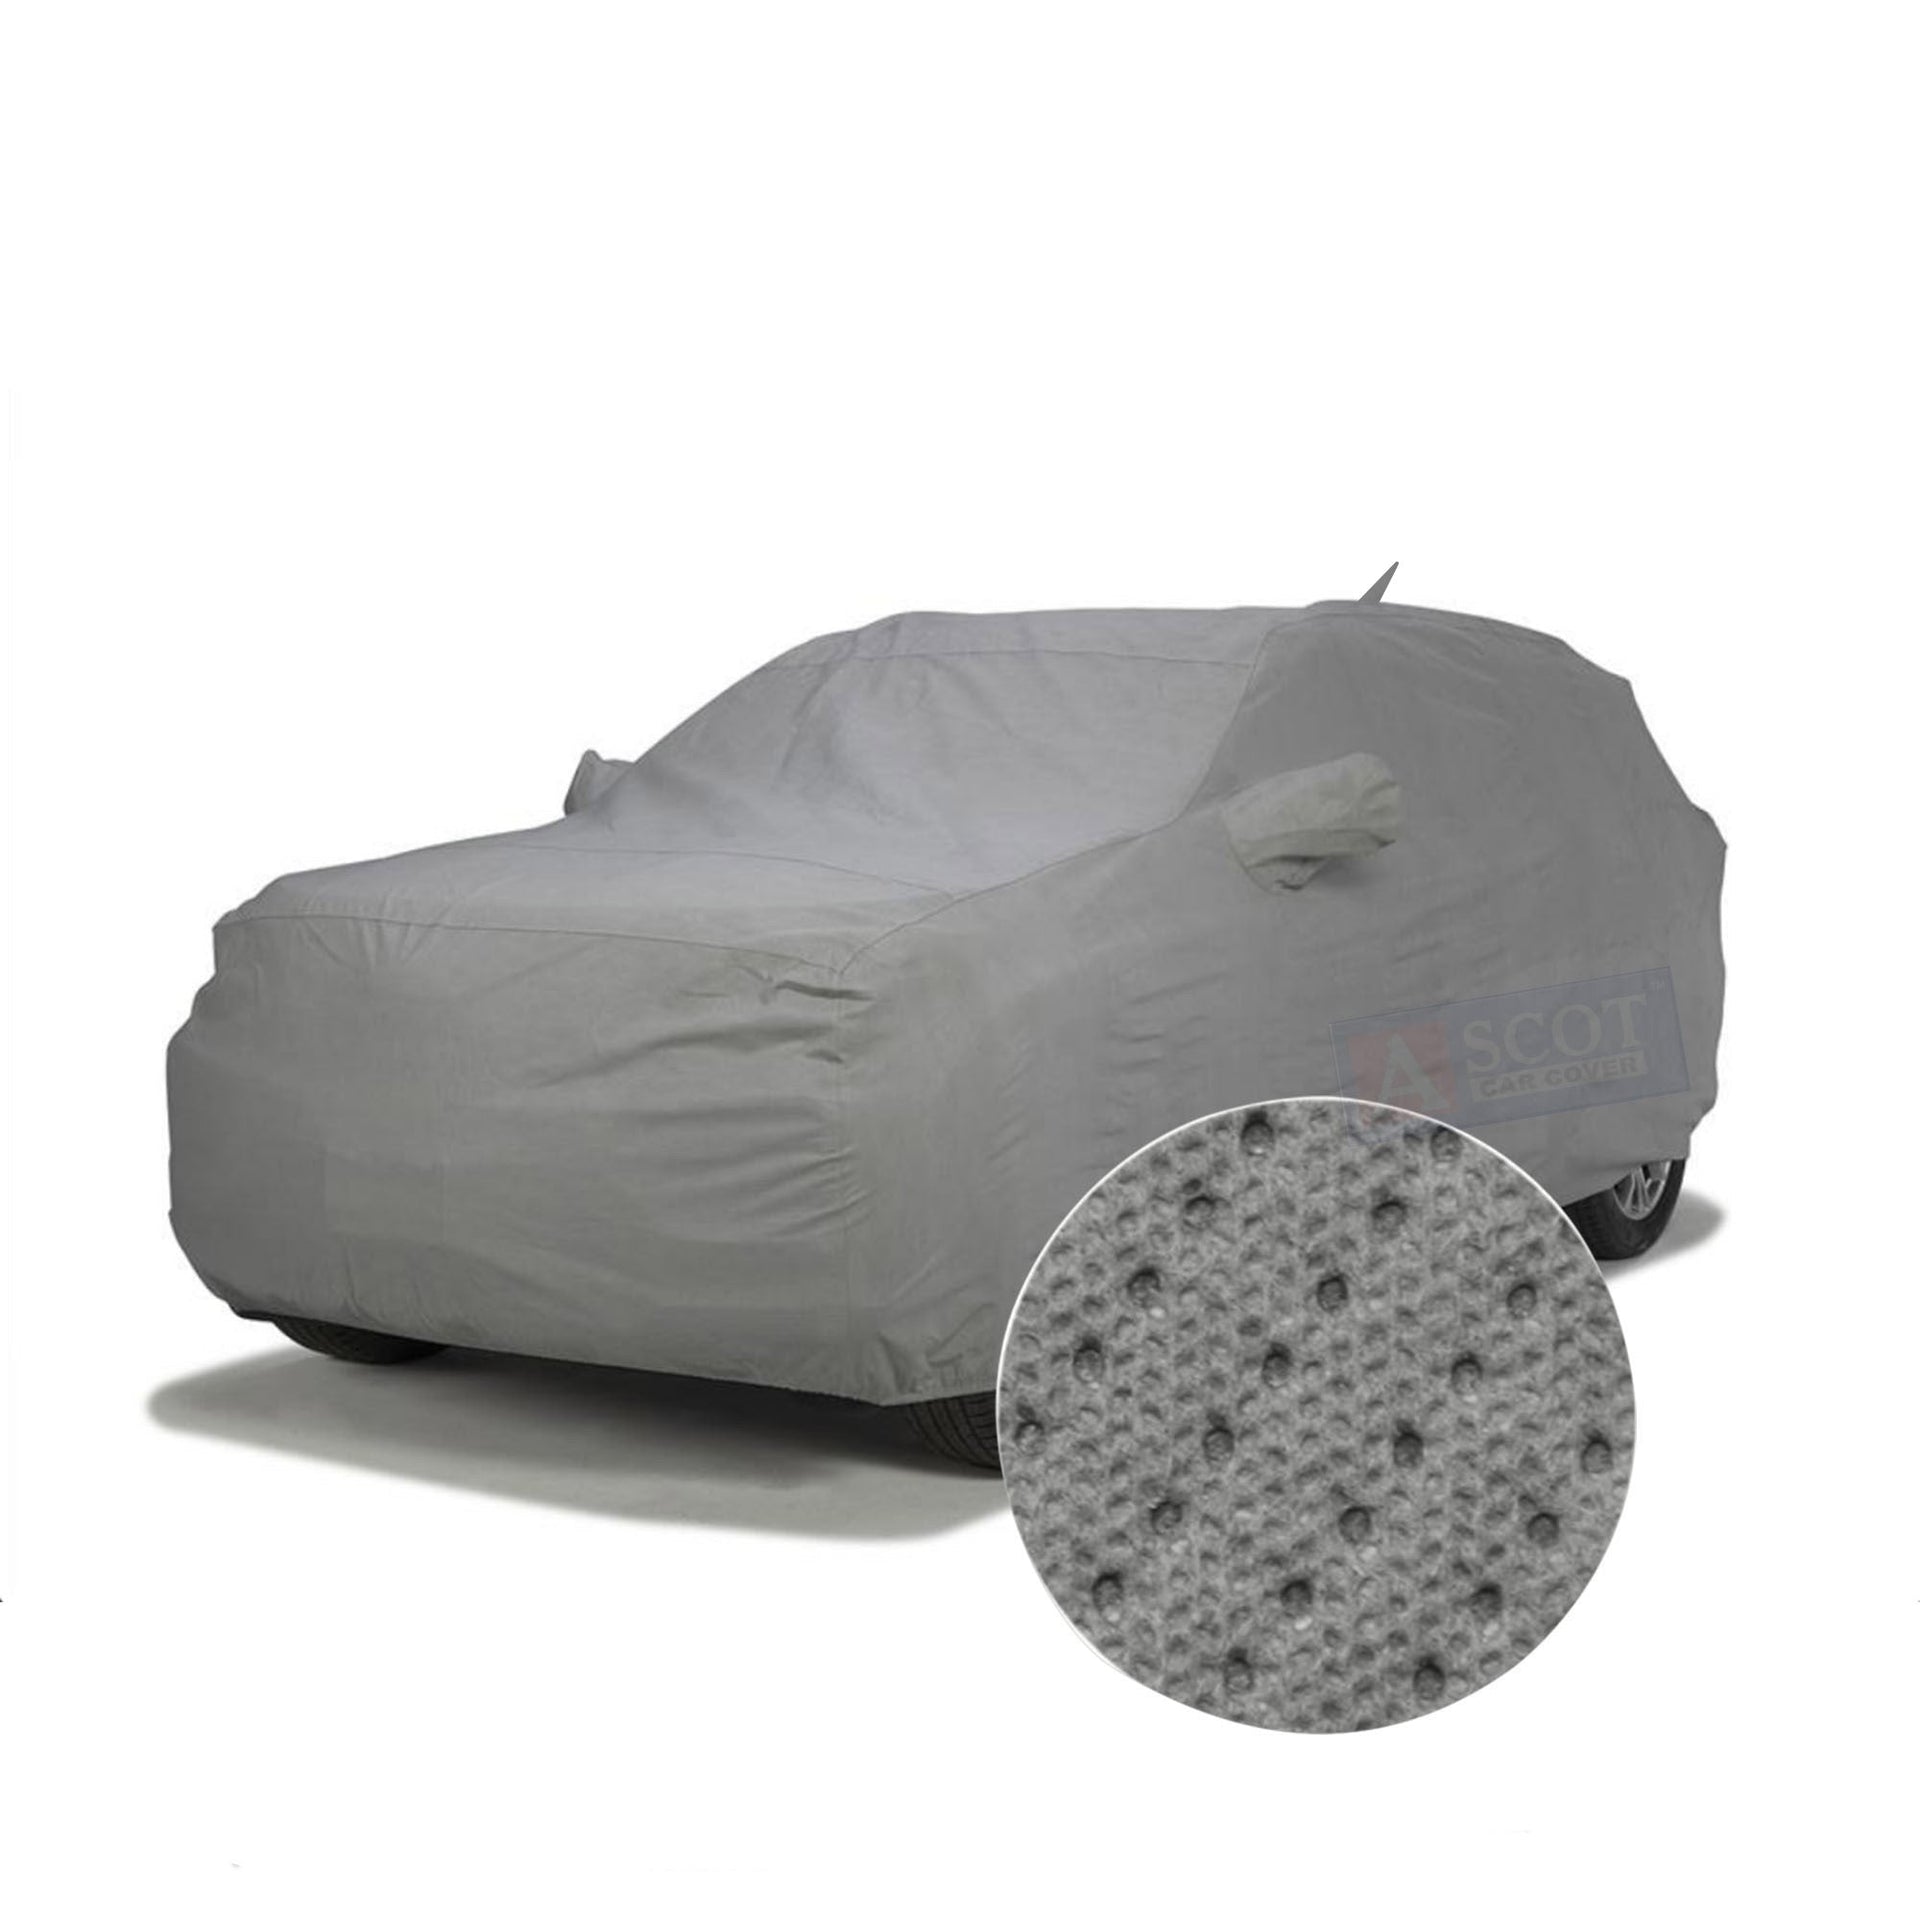 Maruti Celerio Car Cover - Indoor Car Cover (Silver) - Nellai Tarpaulin